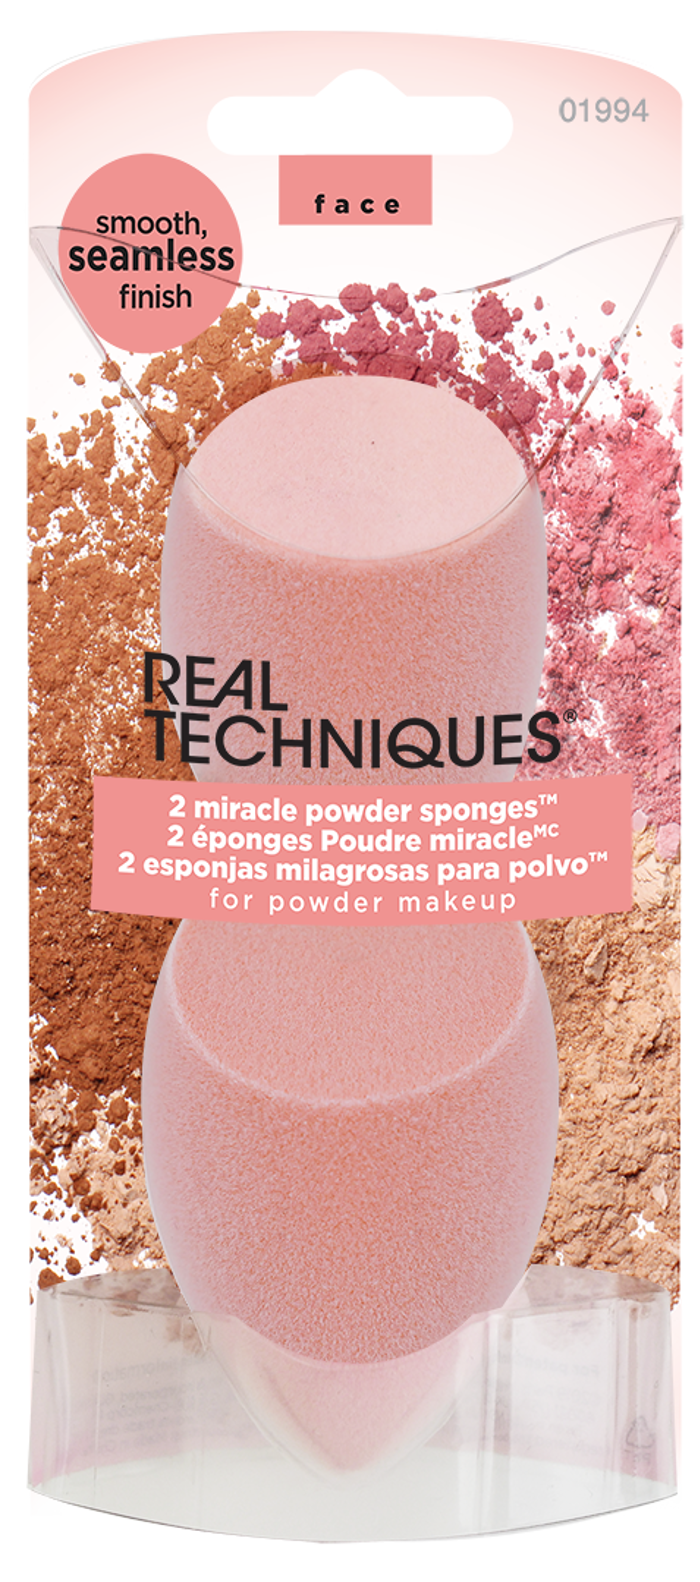 Real Techniques Miracle Powder Sponge Due